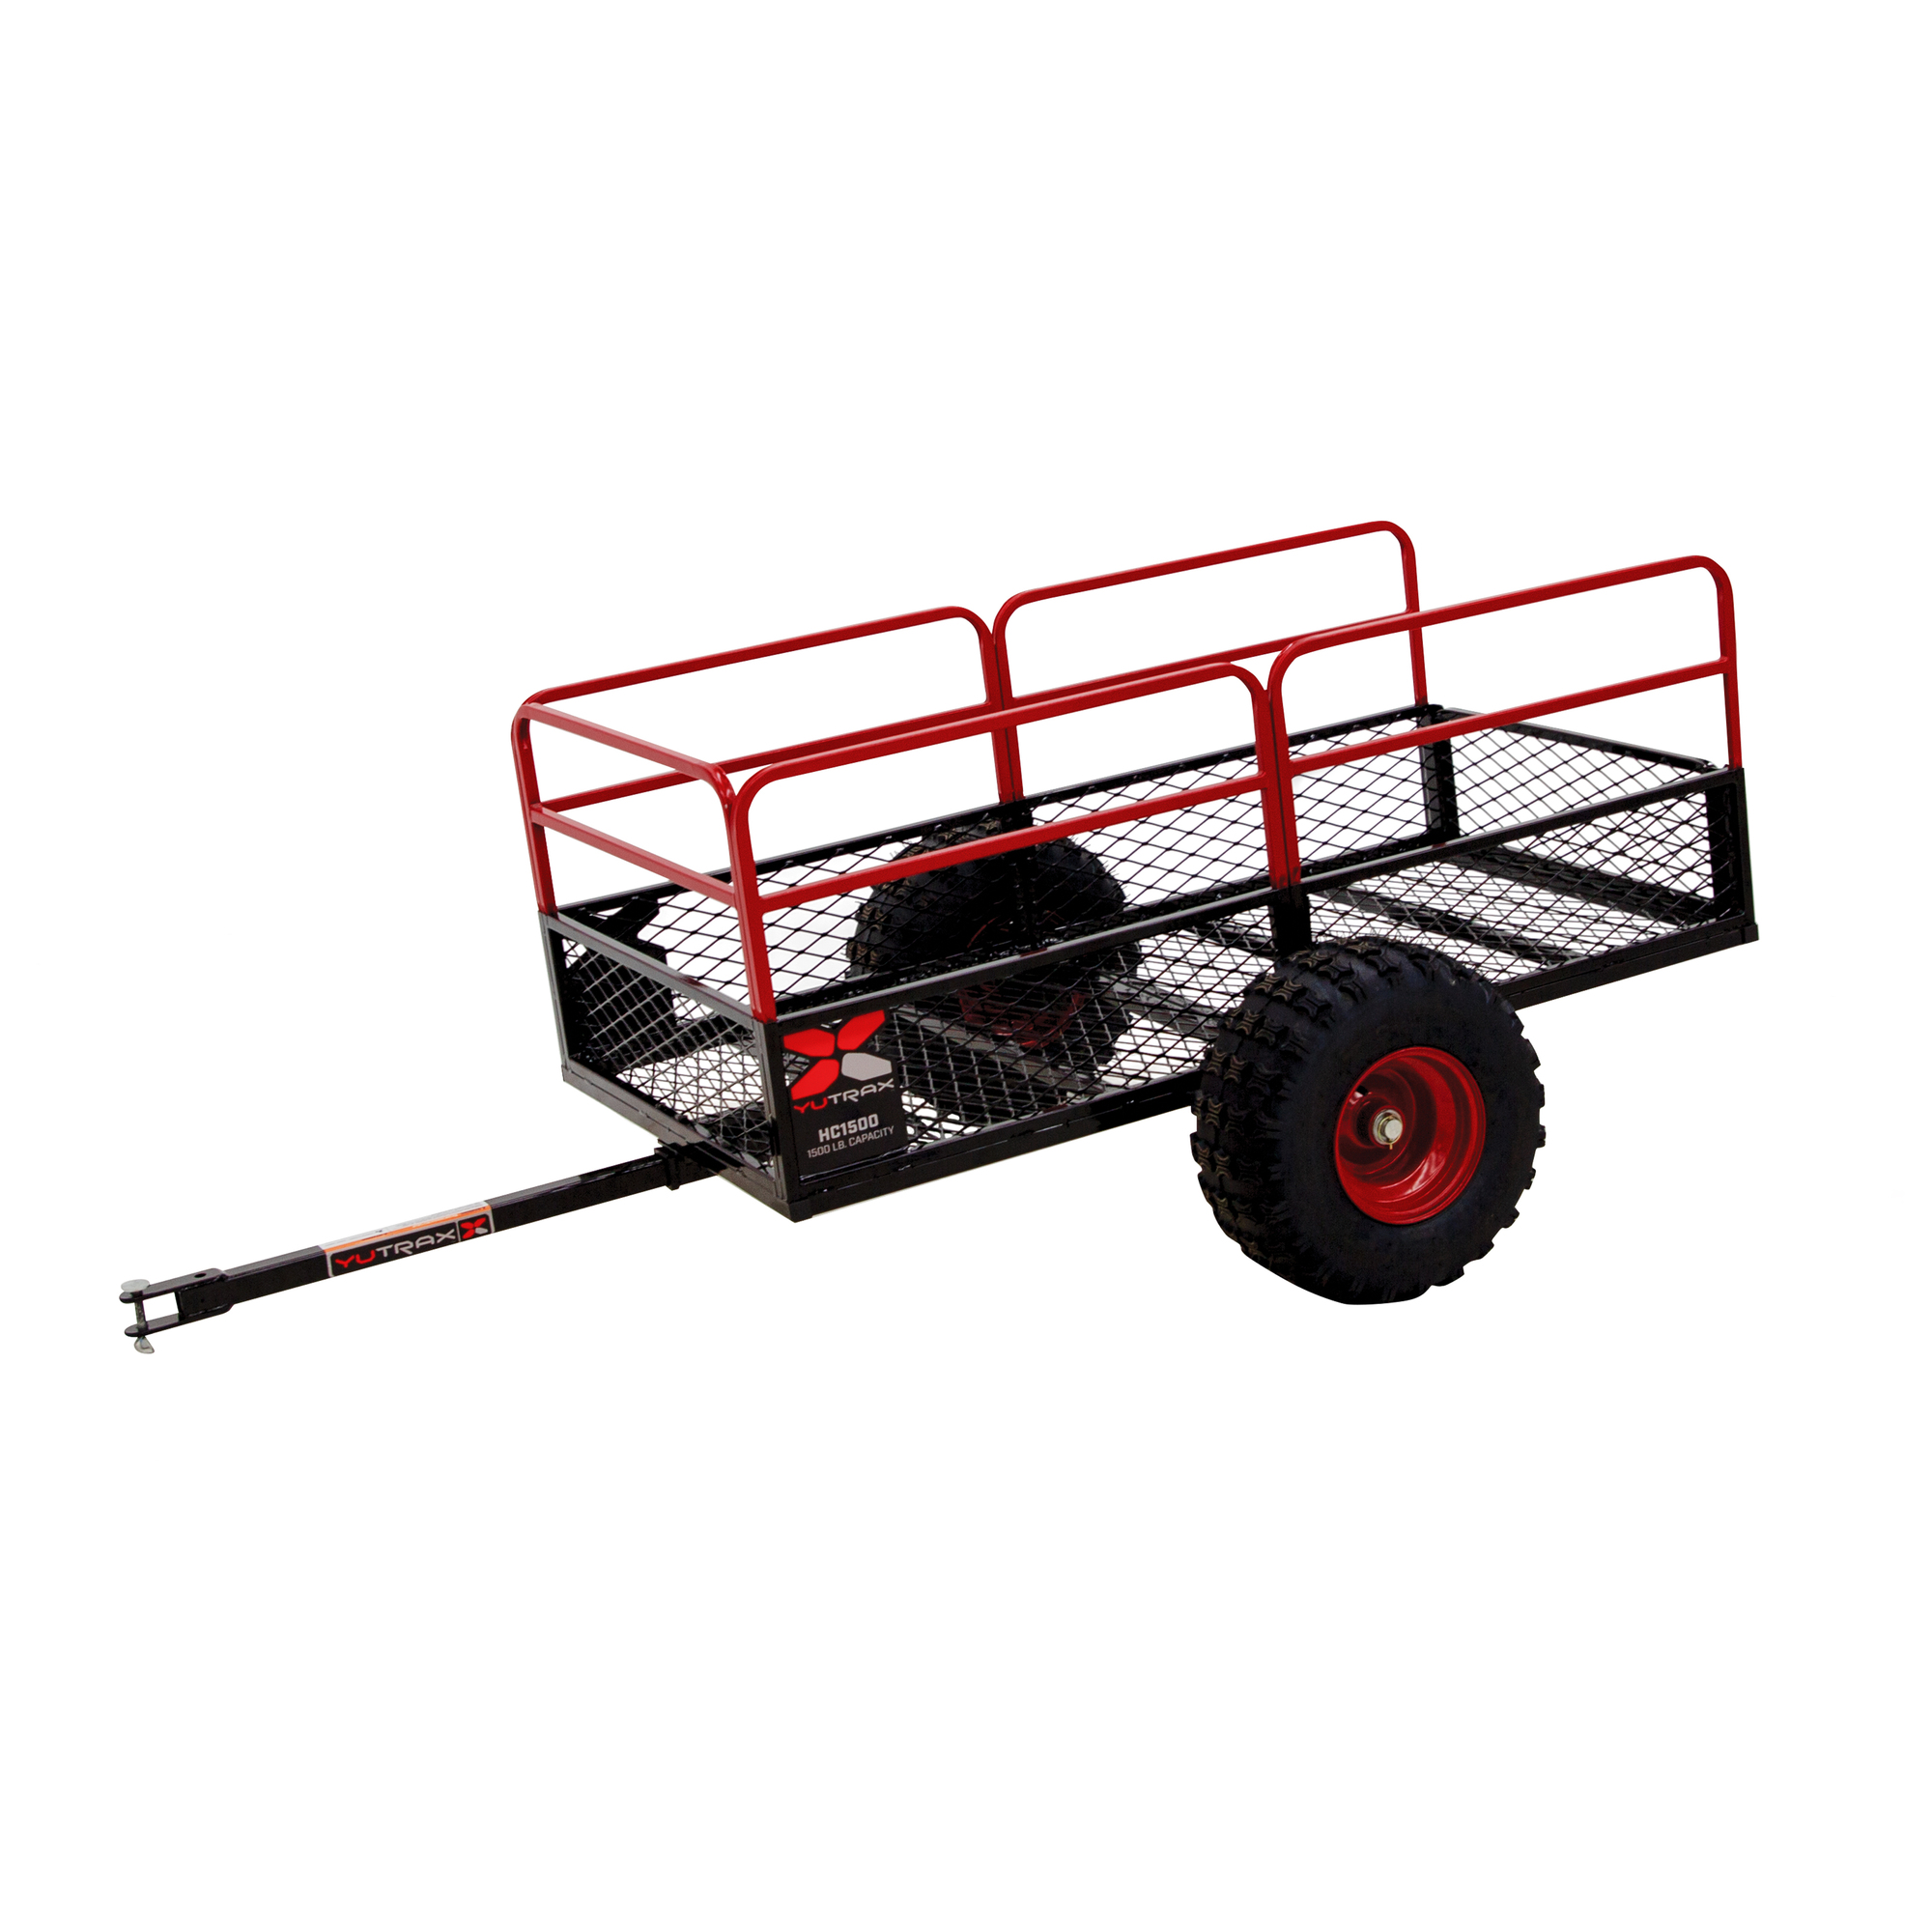 Yutrax, HC1500 ATV Trailer, 1500 lb. Load Capacity, Load Capacity 1500 lb, Model TX162